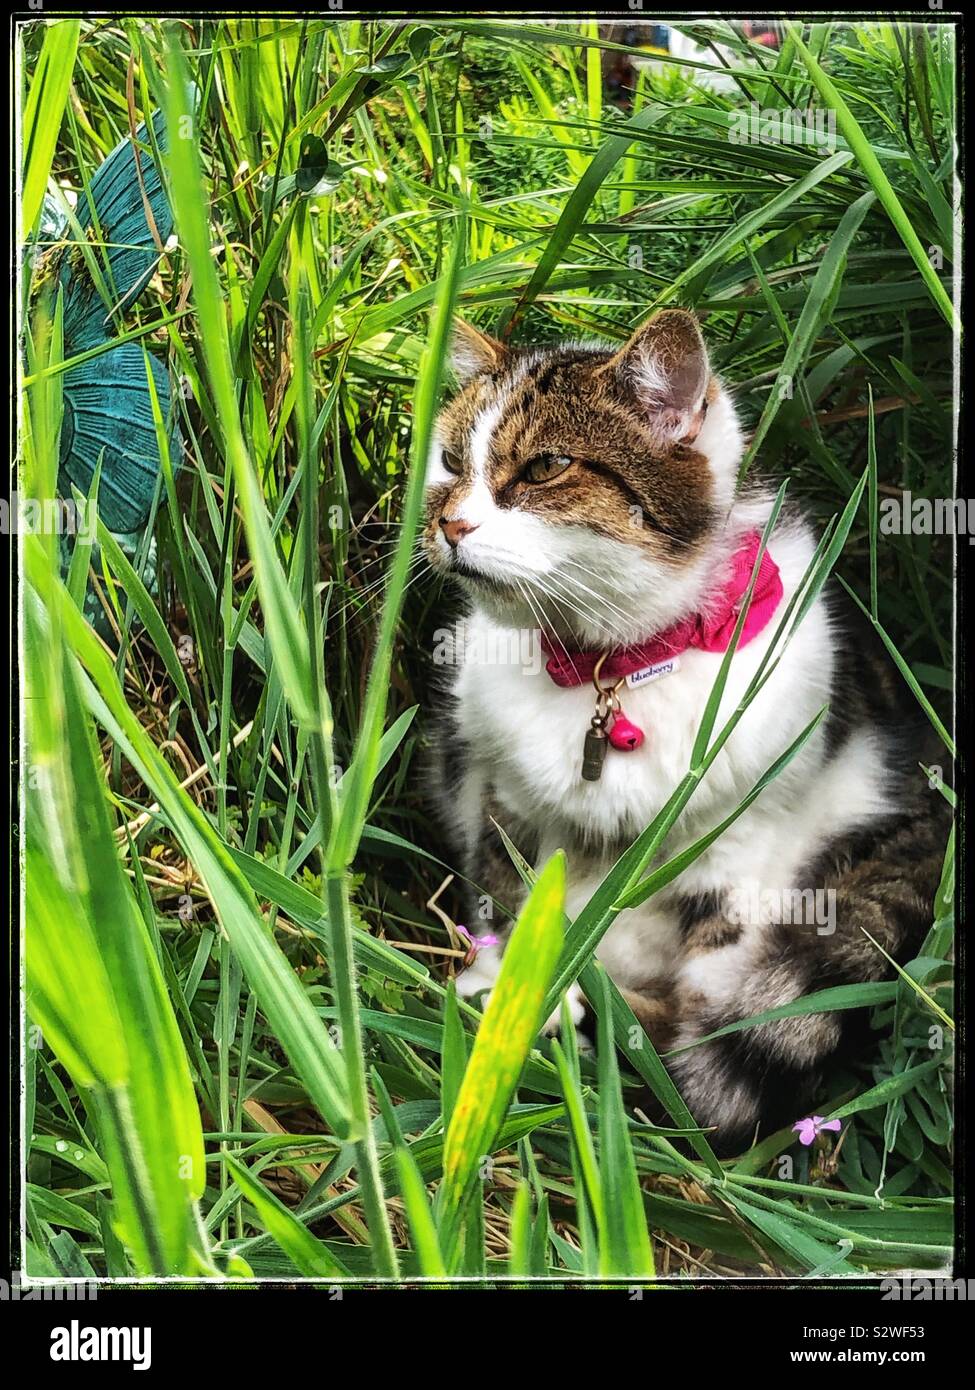 Cat in the jungle garden Stock Photo